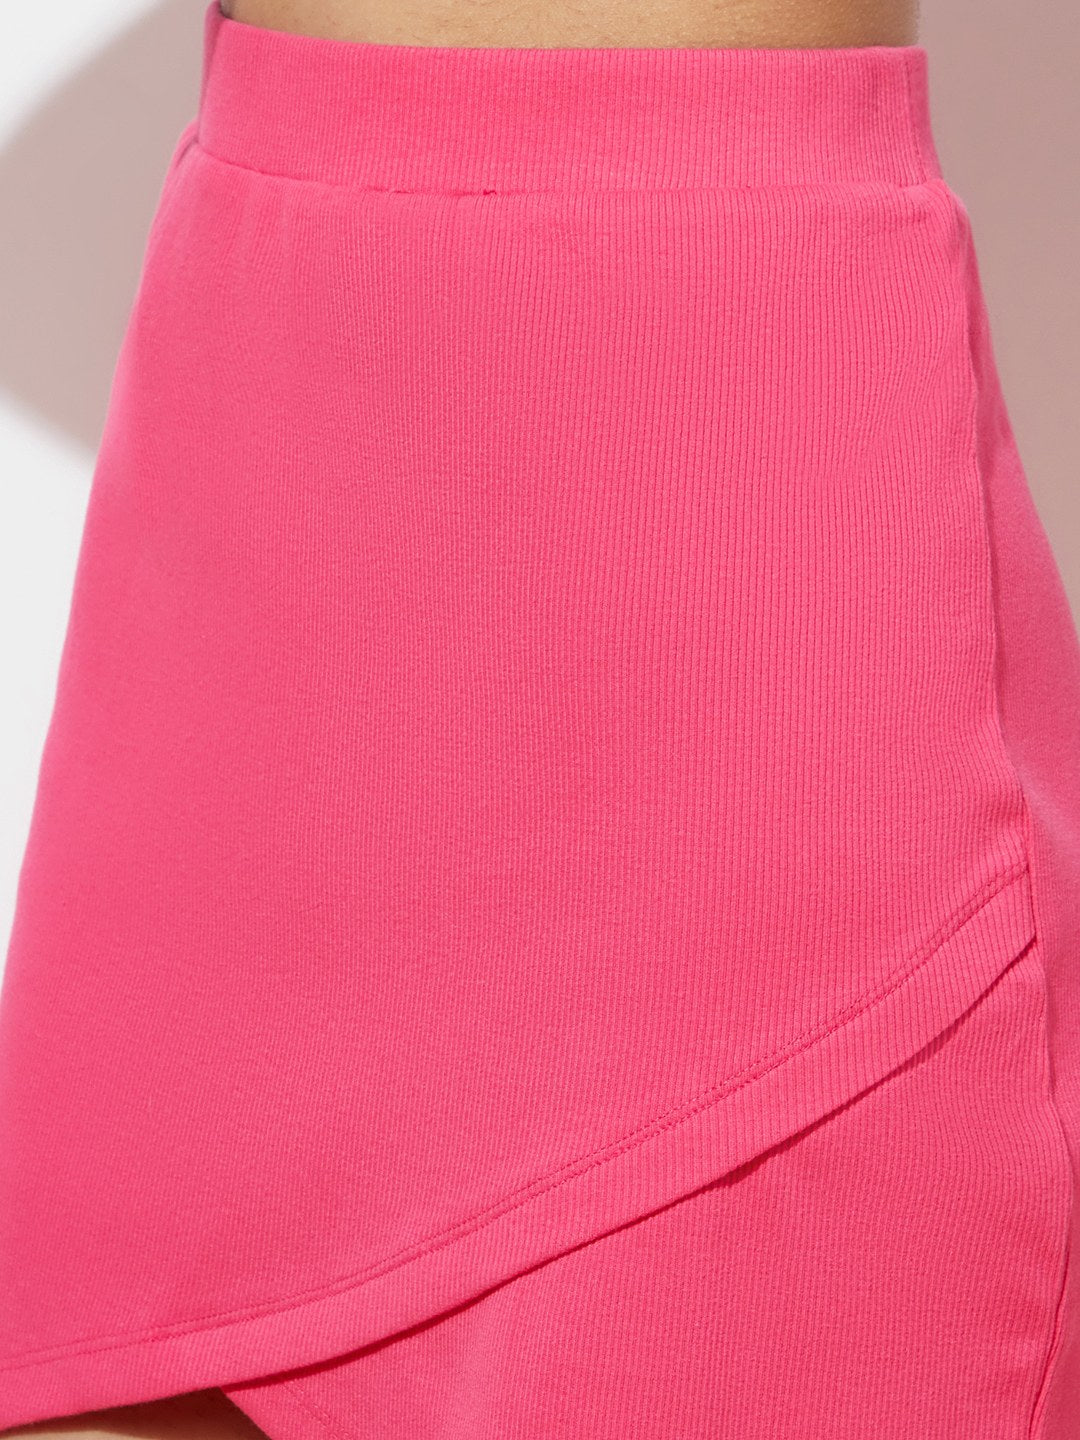 Girls Ribbed Pink Skirt